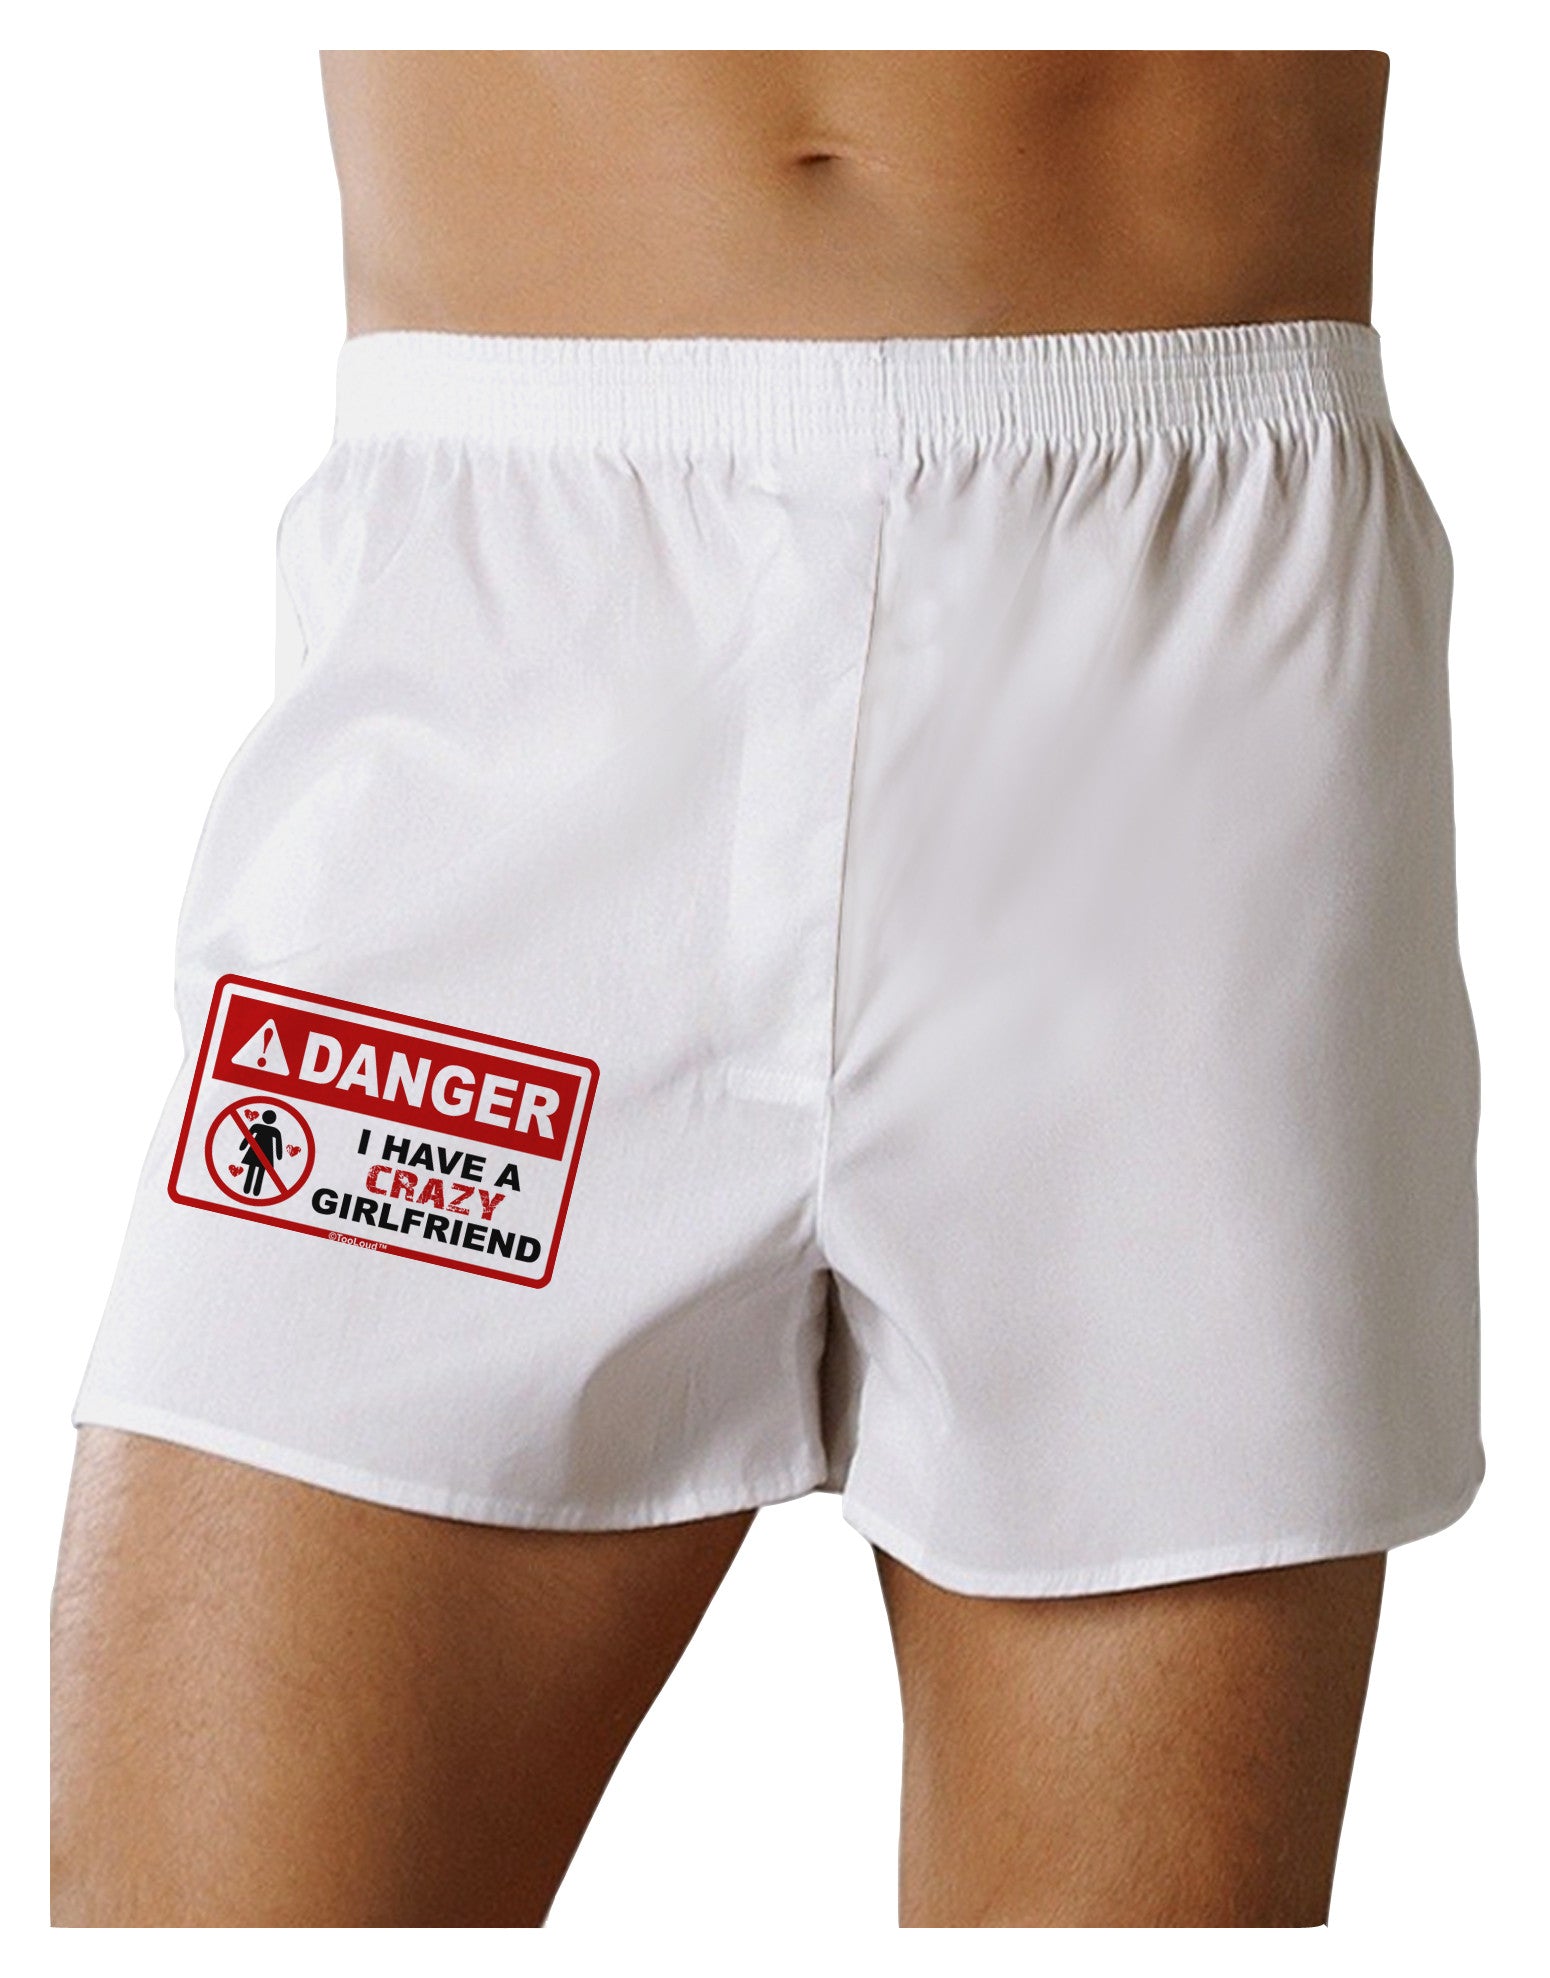 Danger - Crazy Girlfriend Boxer Shorts - Davson Sales